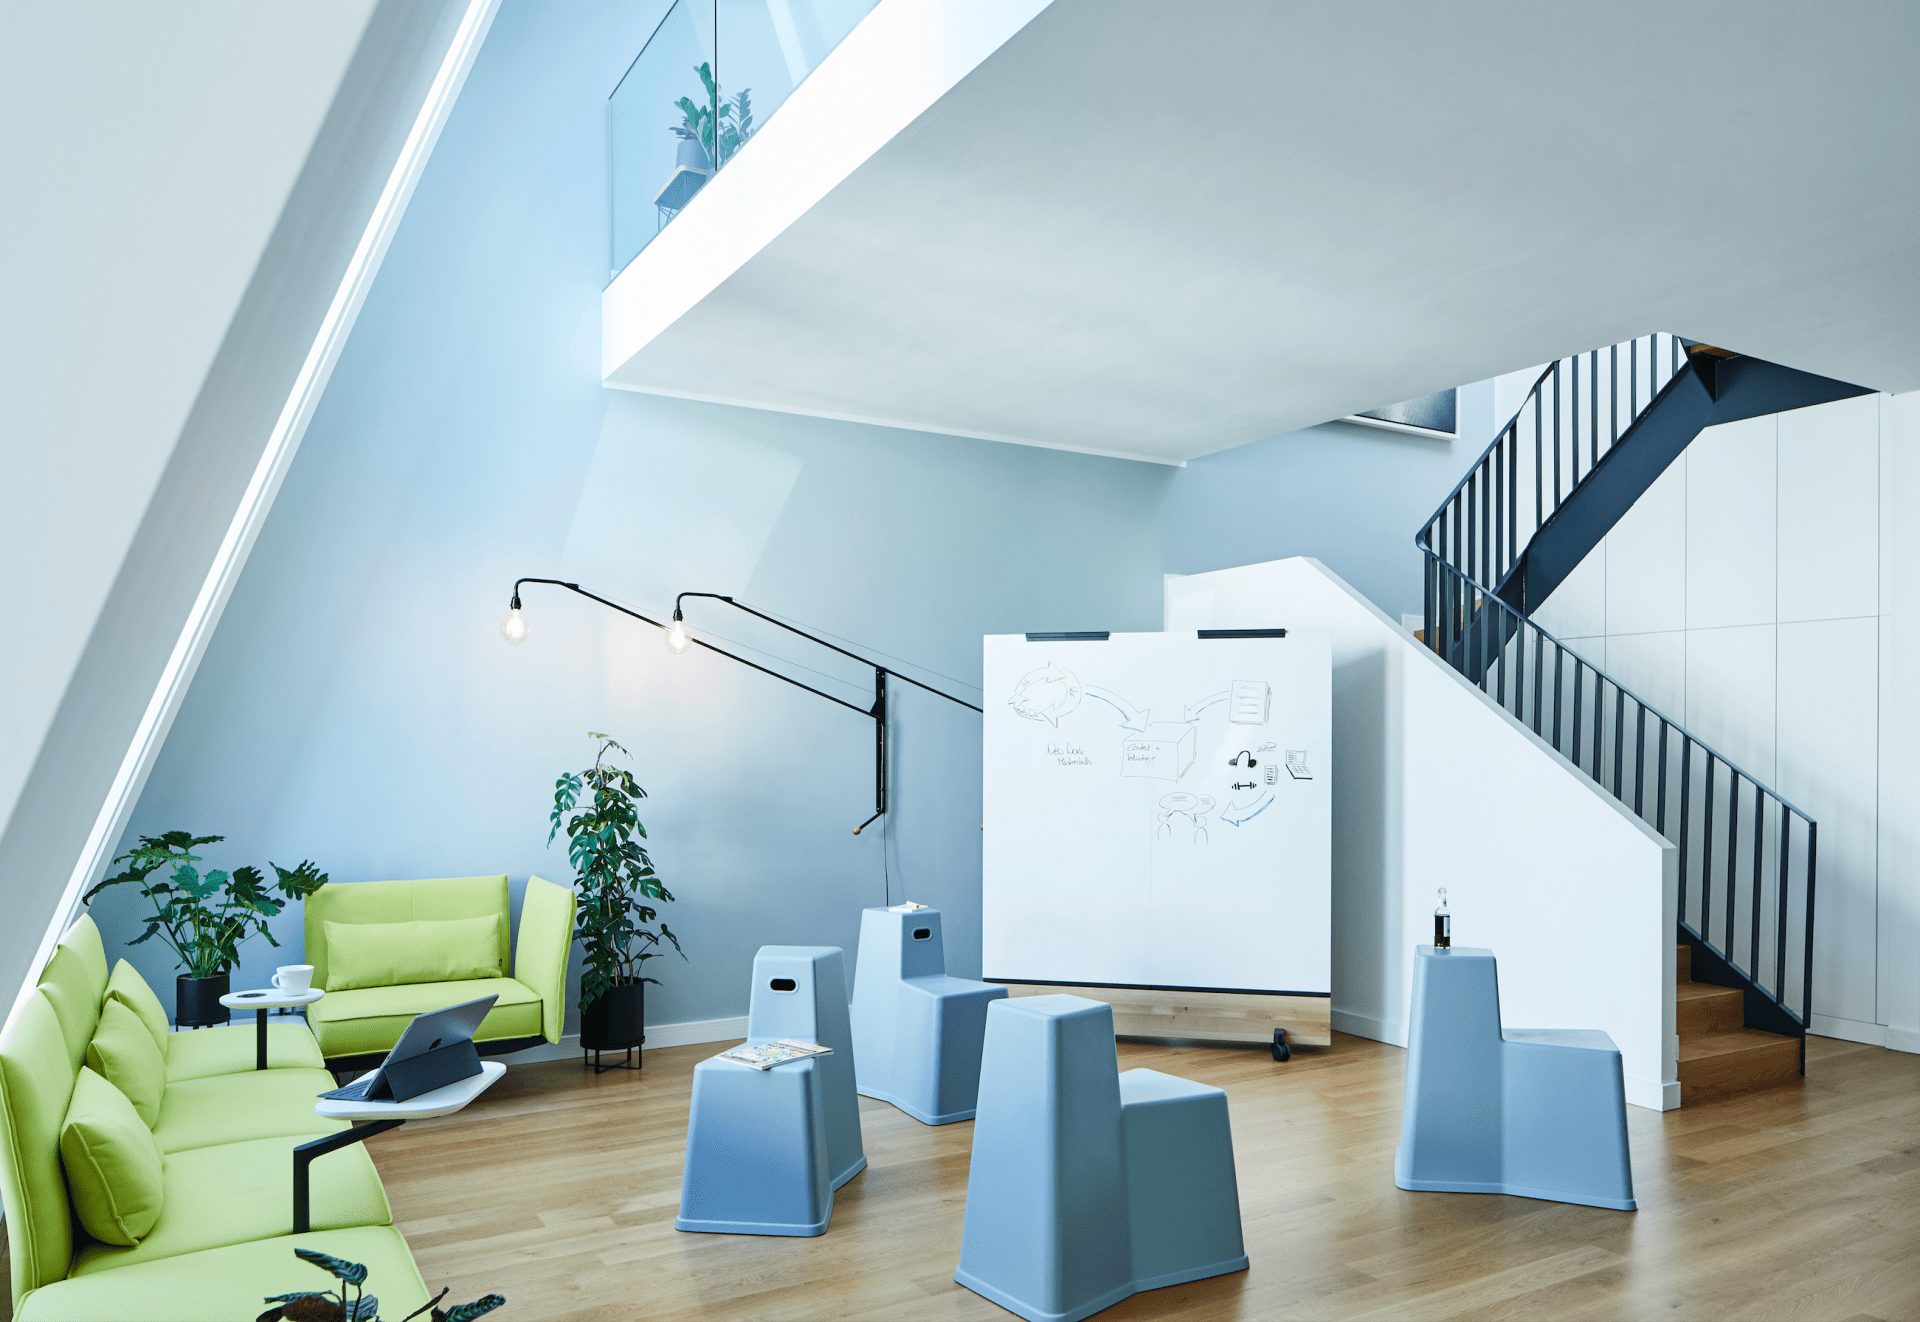 Studio Besau-Marguerre teams up with Vitra to design WorkLifeSpace in Hamburg's Apartimentum